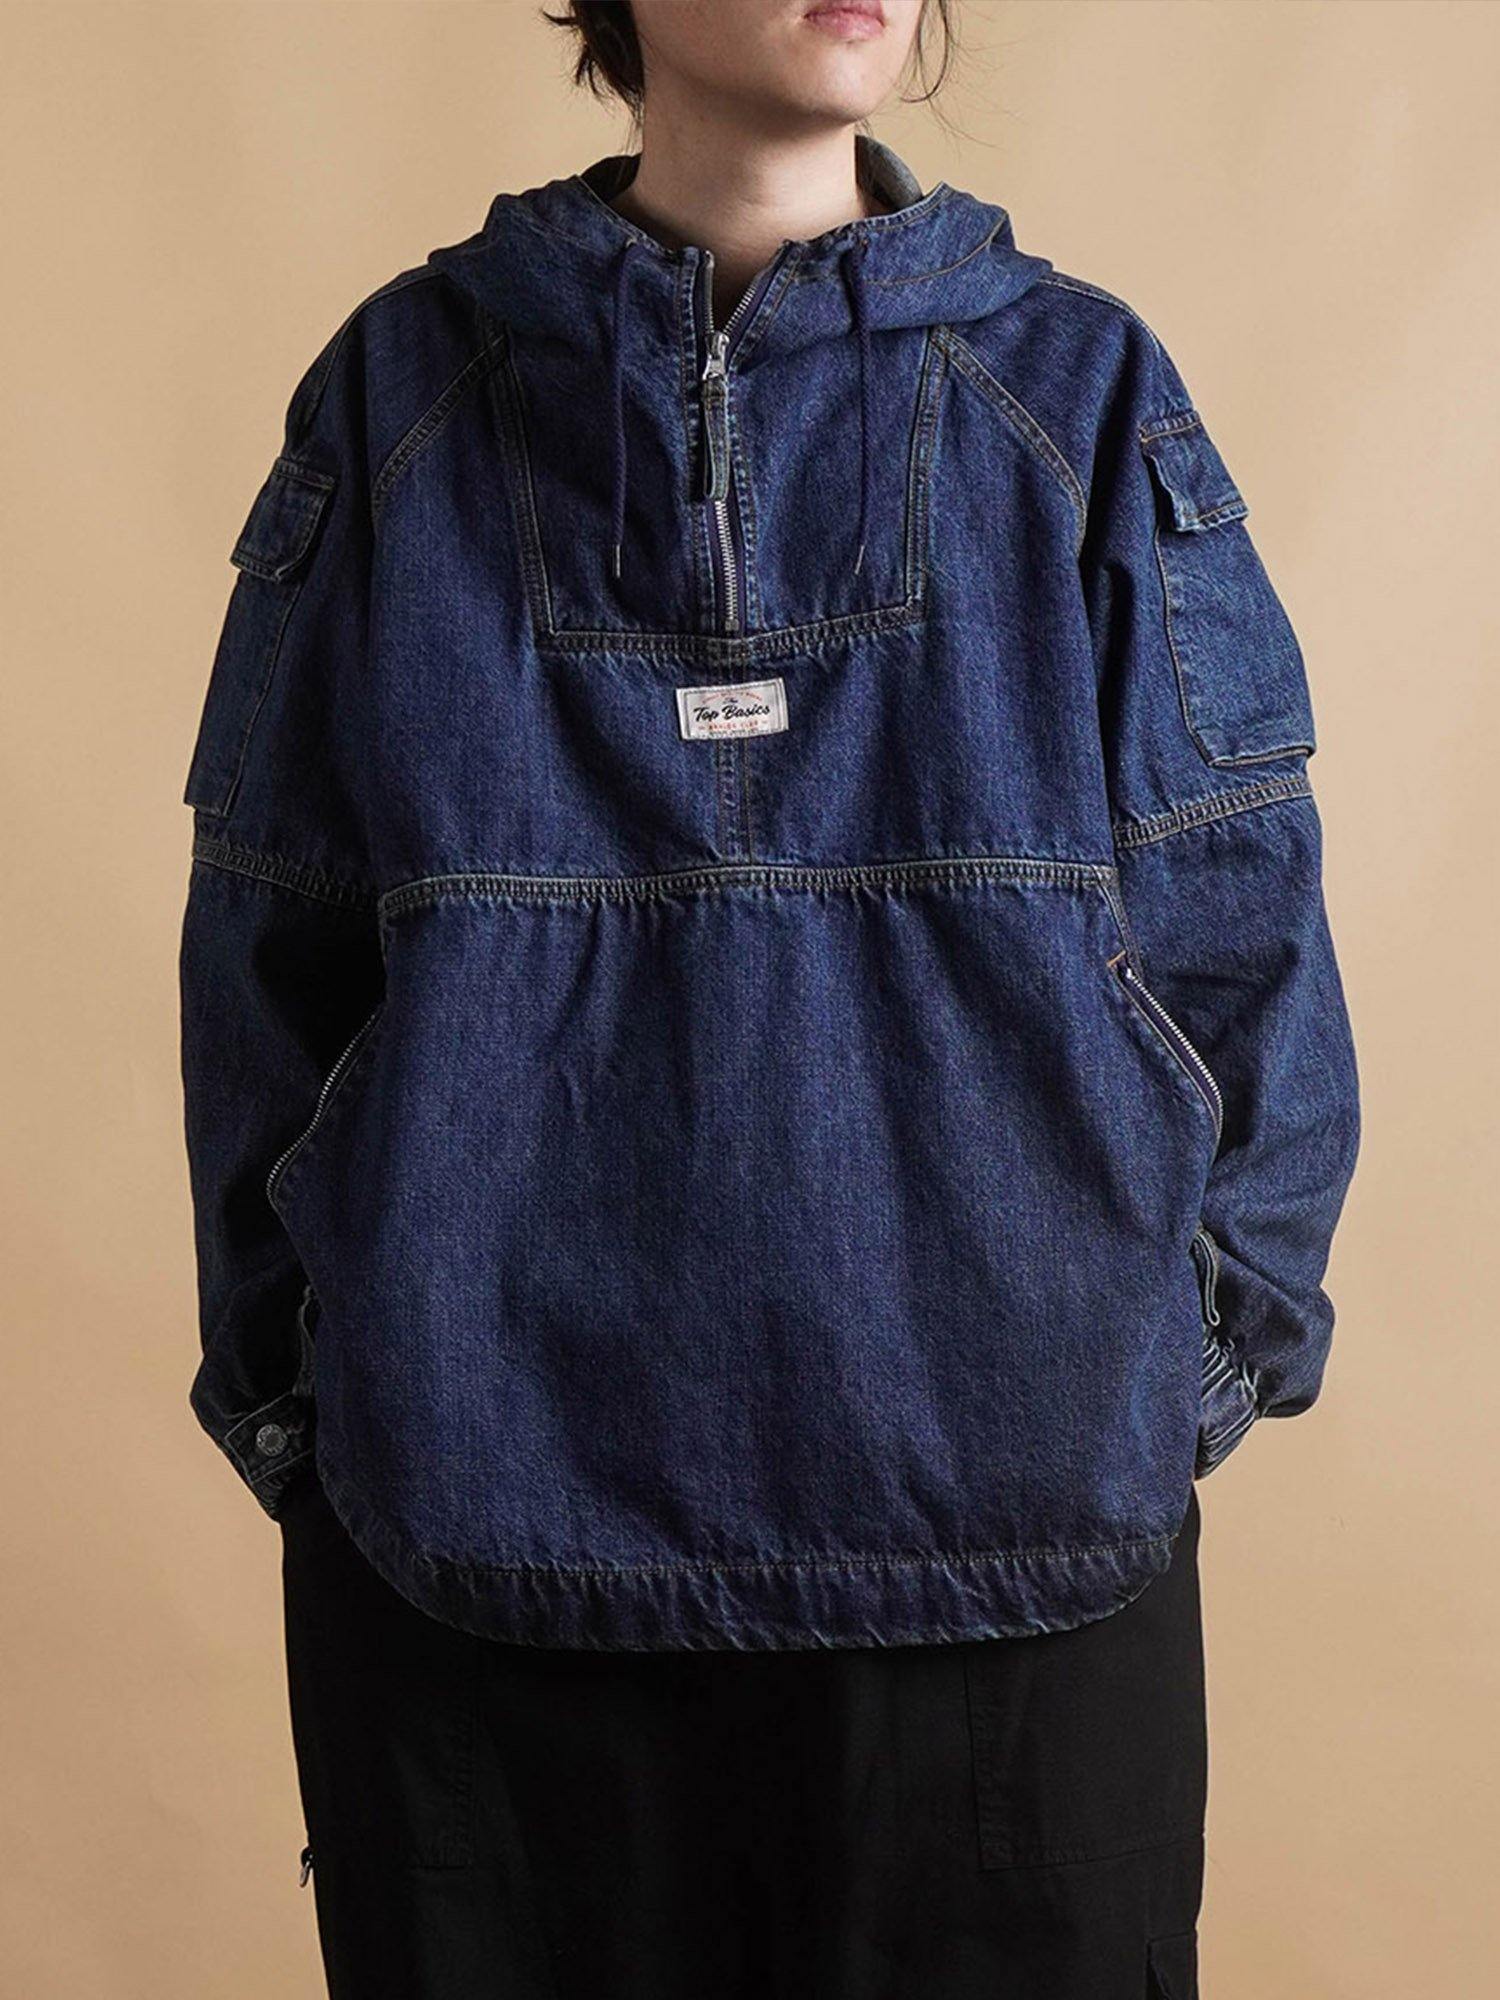 TopBasics Half-Zip Pullover Denim Jacket